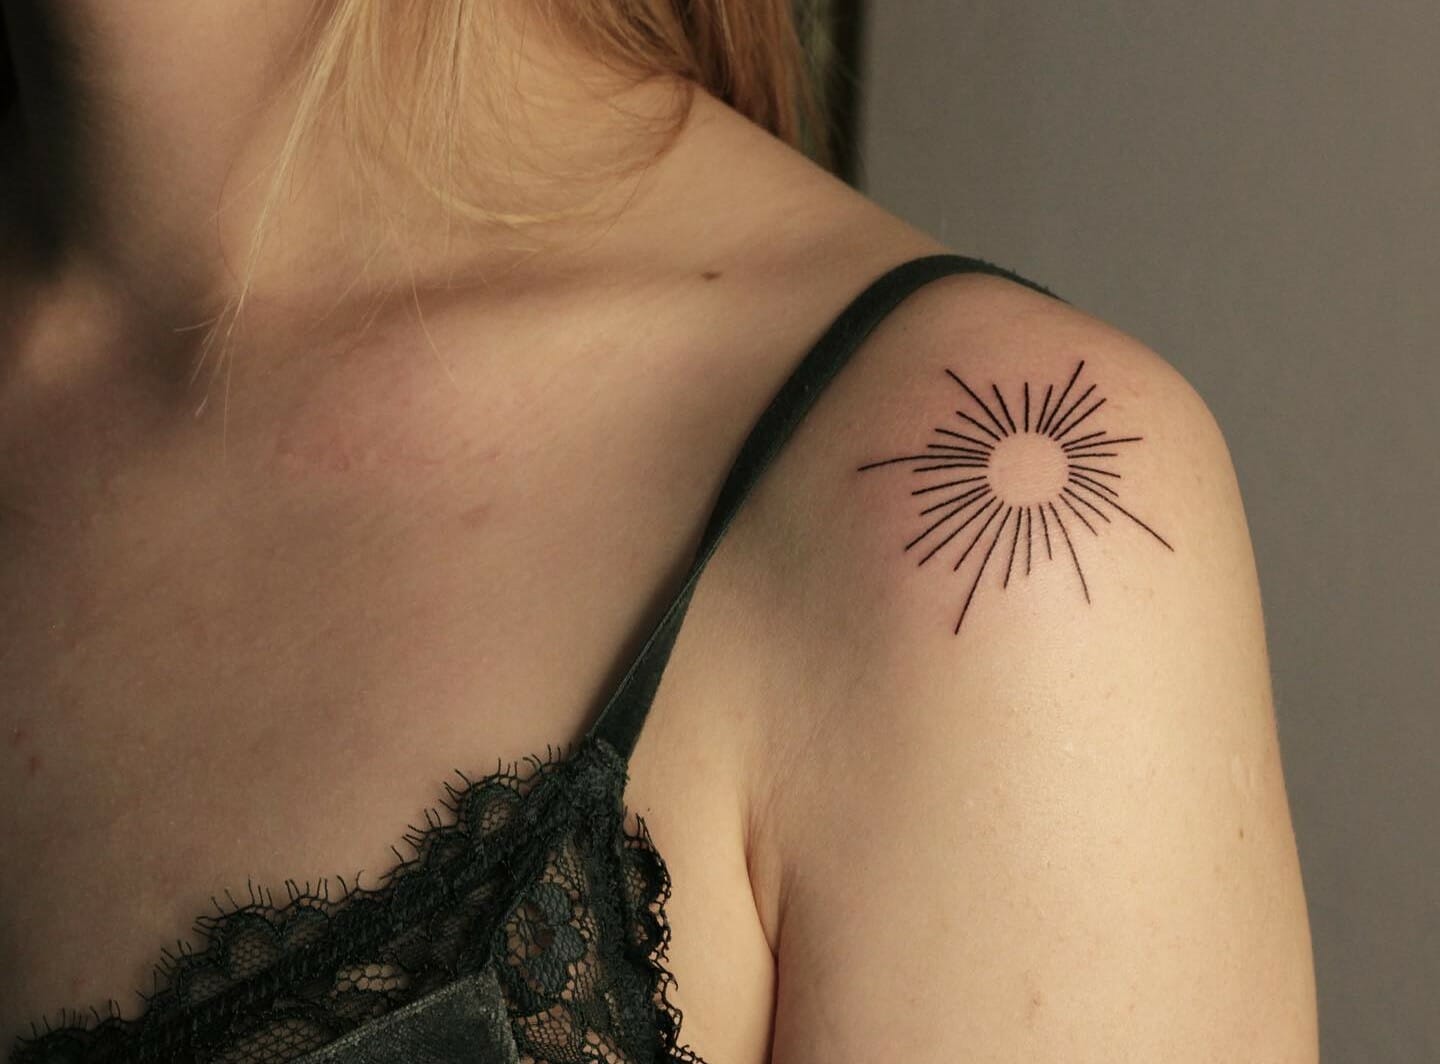 10 Best Sunshine Tattoo Ideas That Will Blow Your Mind!

+2023